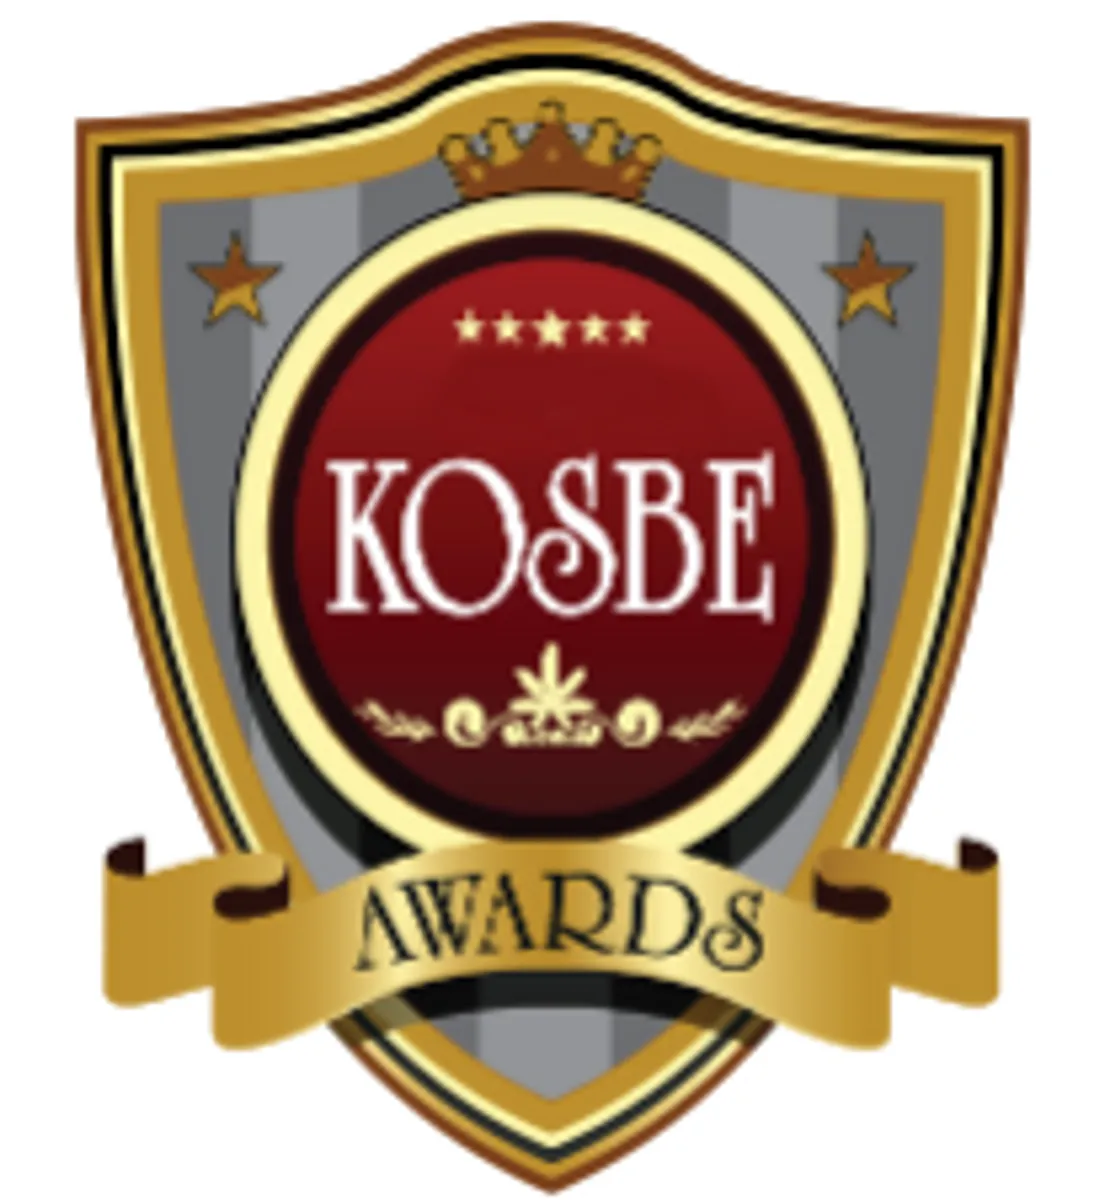 Kosbe Award